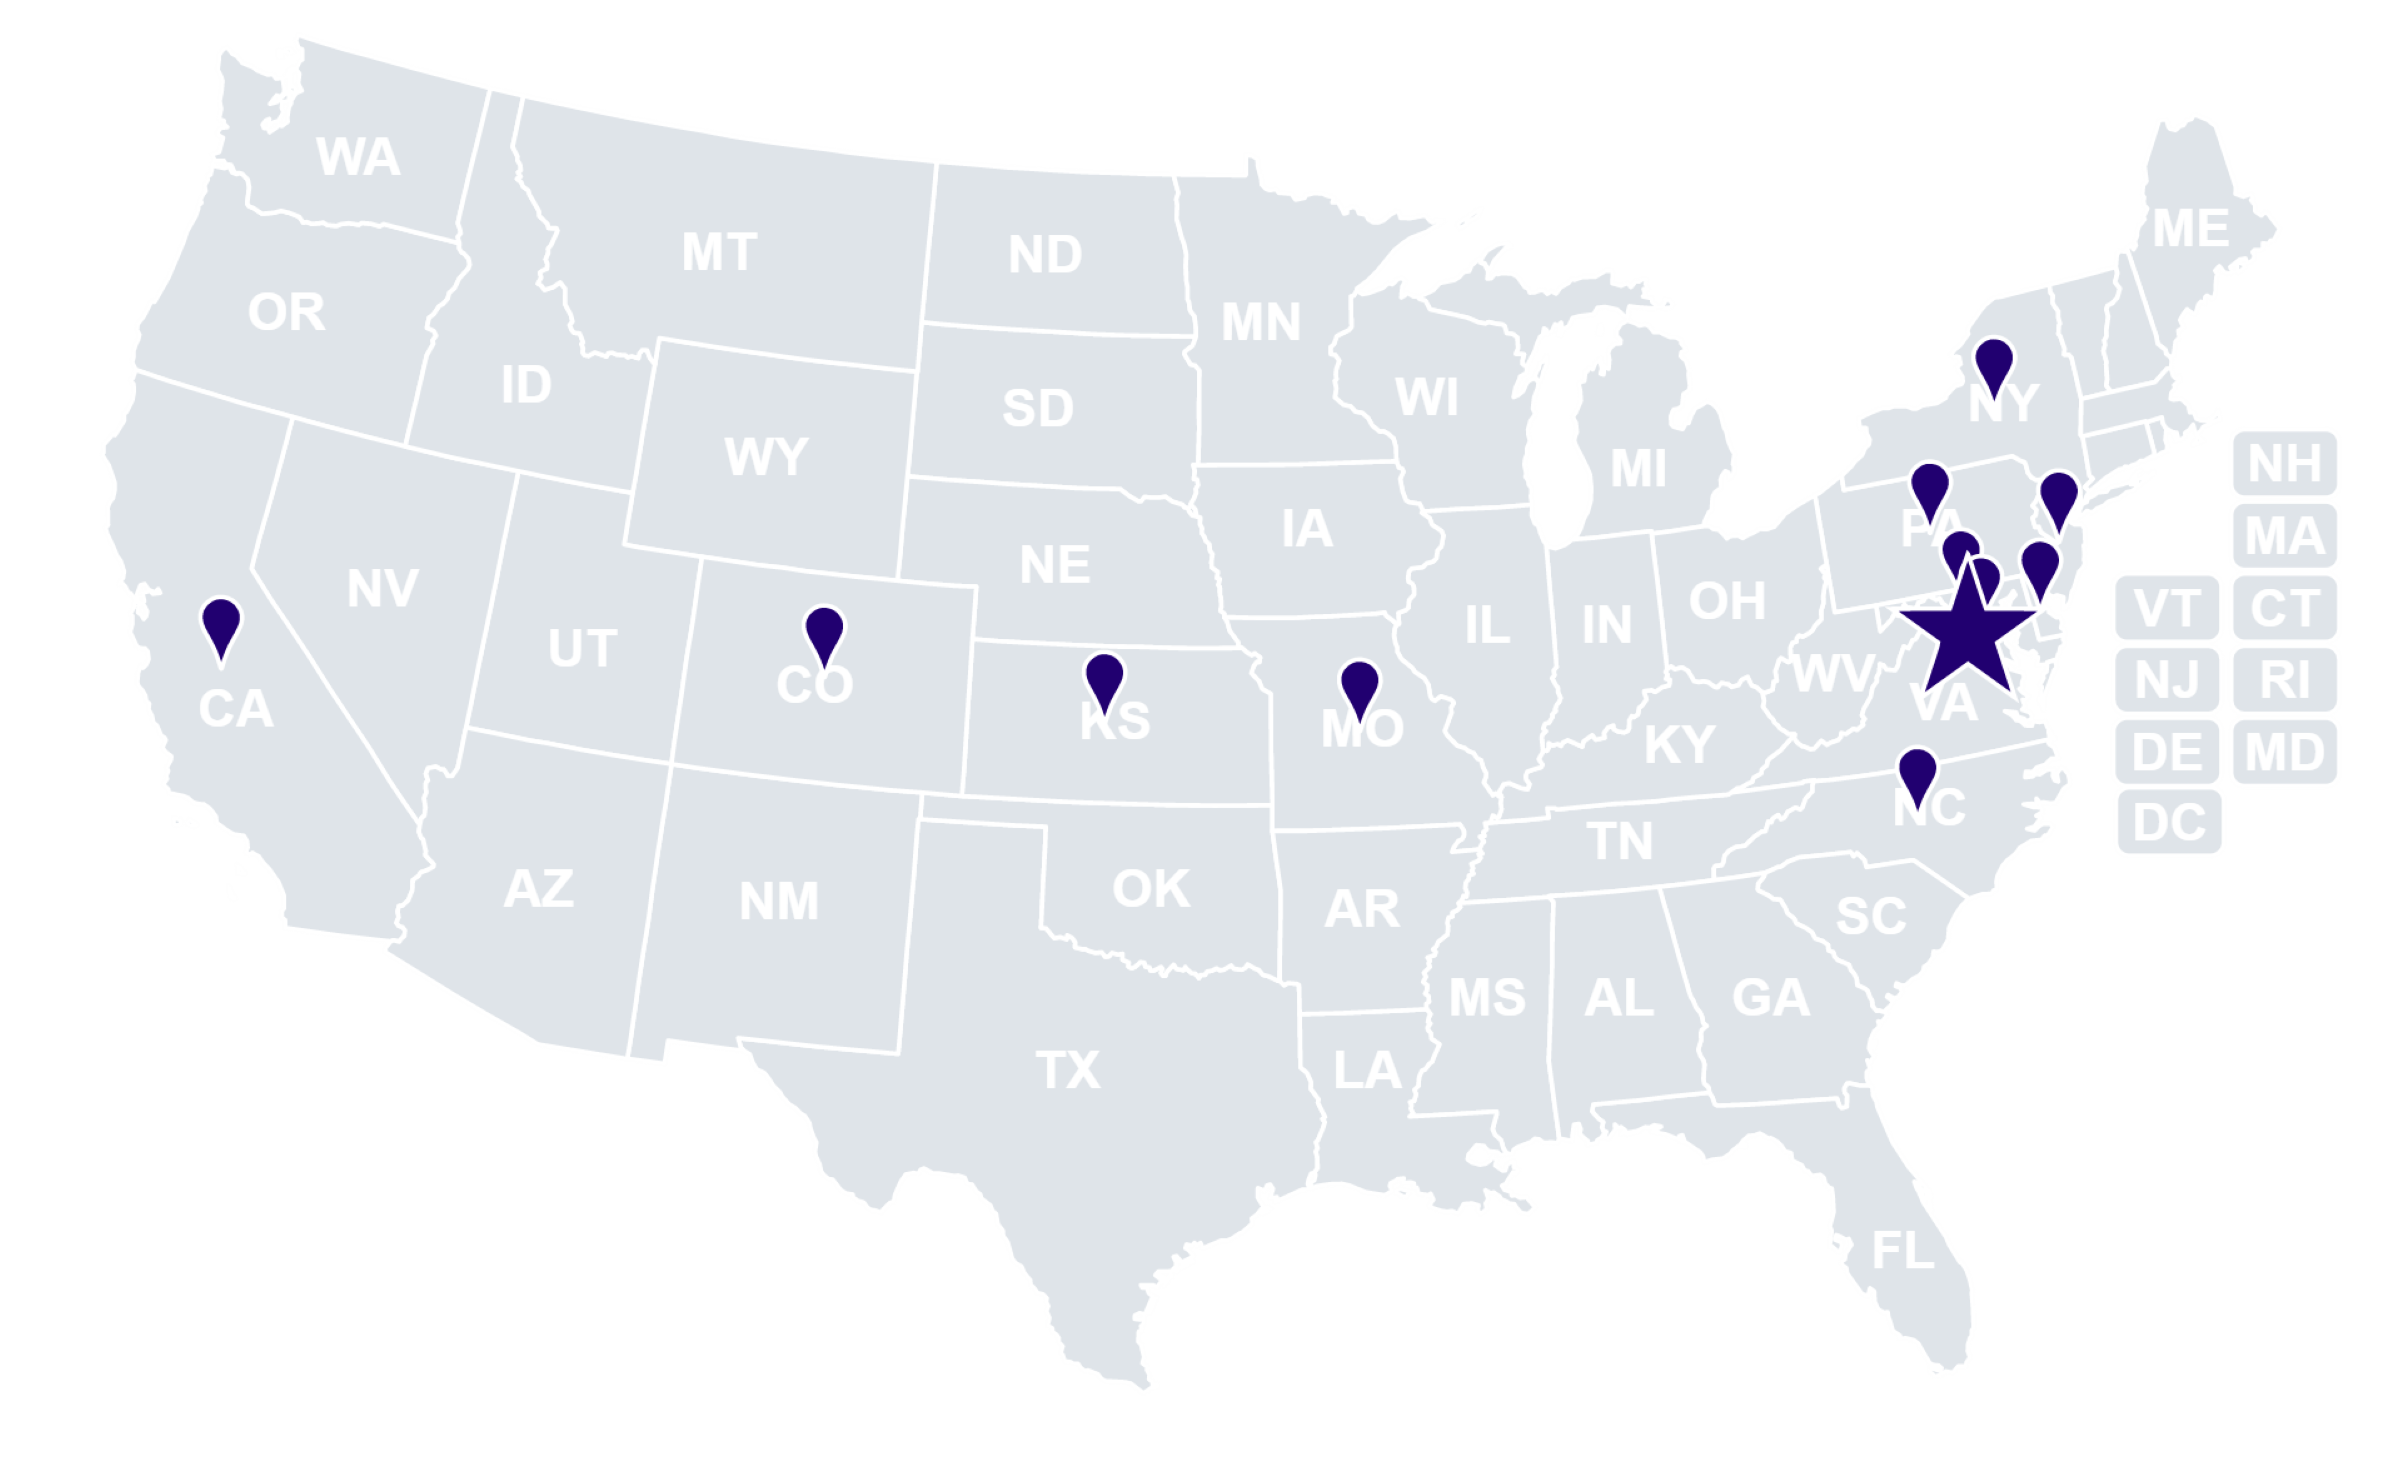 ILS is located in California, Colorado, Delaware, Kansas, Maryland, Missouri, New Jersey, New York,North Carolina, Pennsylvania, and Washington DC. The headquarter Office is located in Virginia.